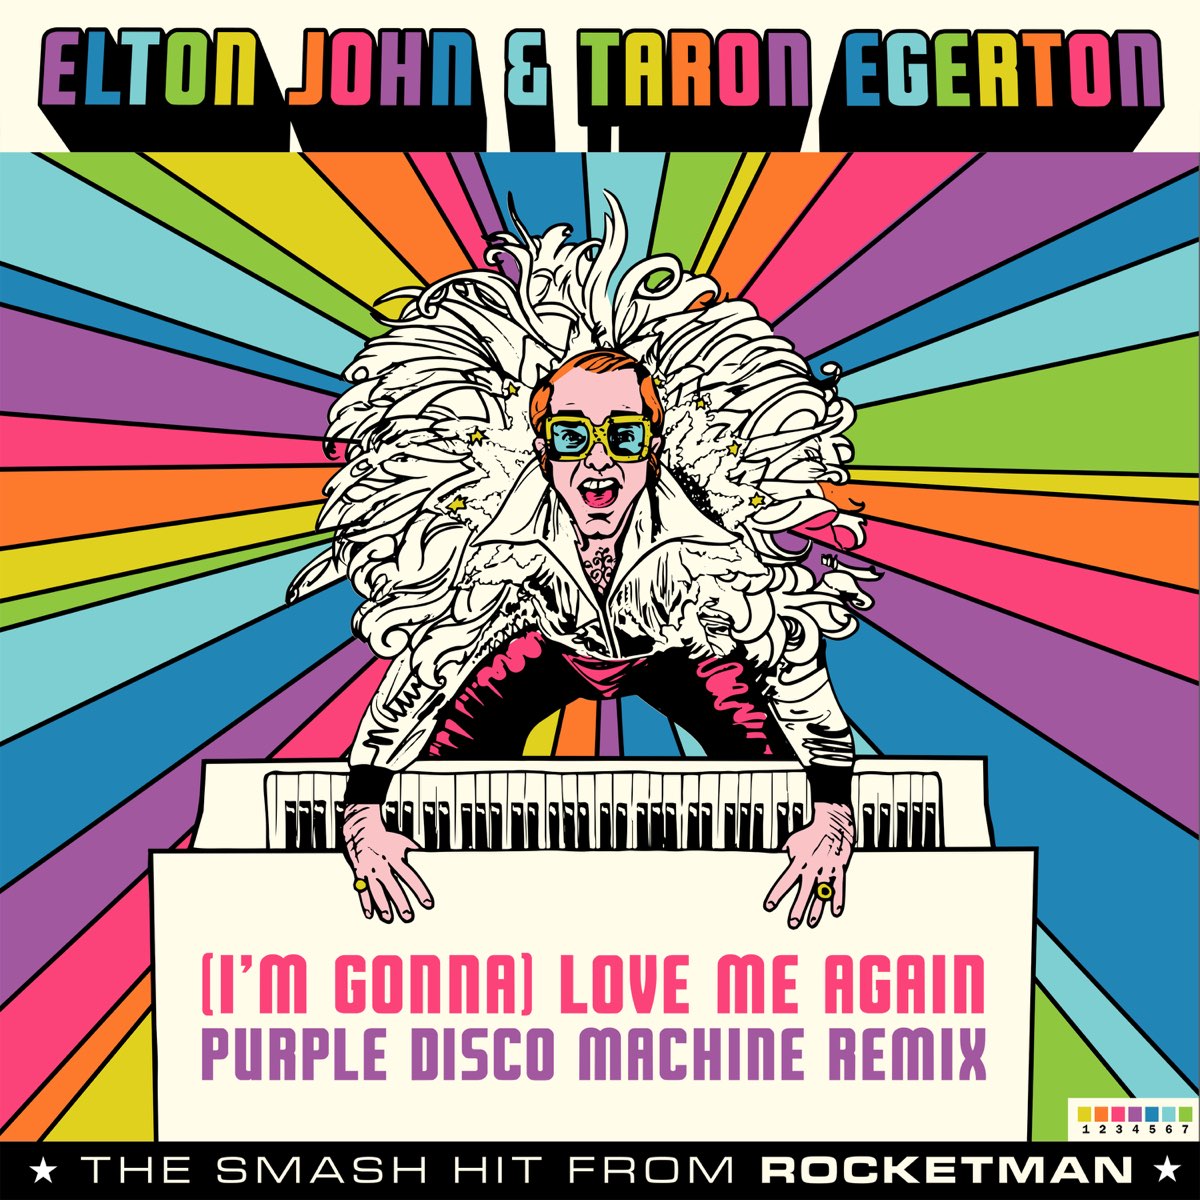 I'm Gonna) Love Me Again (From "Rocketman") [Purple Disco Machine Remix] -  Single di Elton John & Taron Egerton su Apple Music